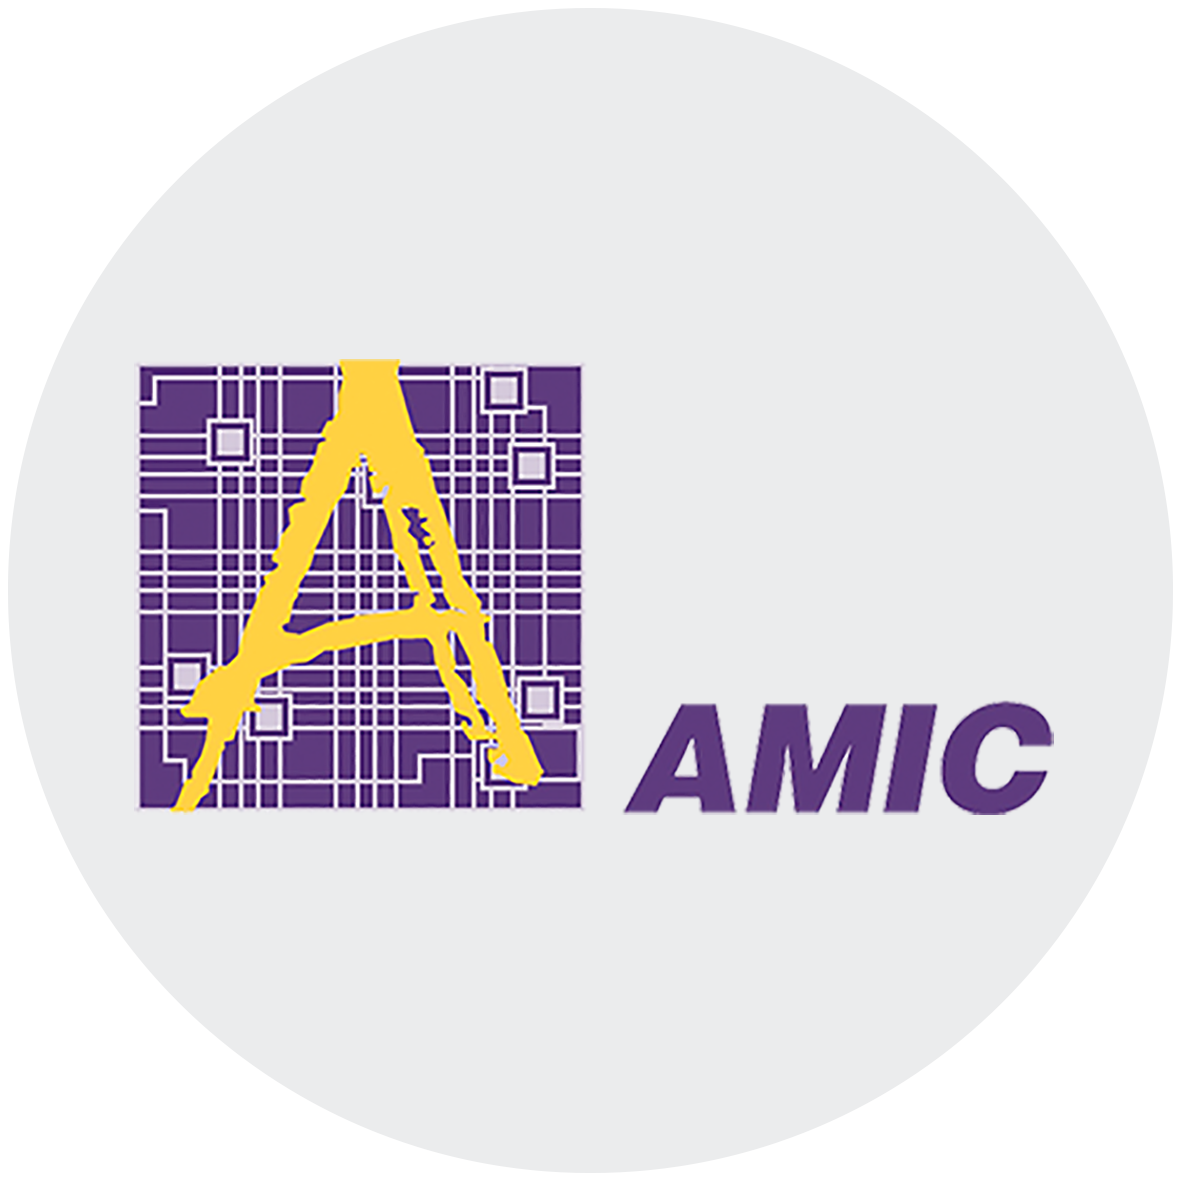 AMIC - DRAM Components